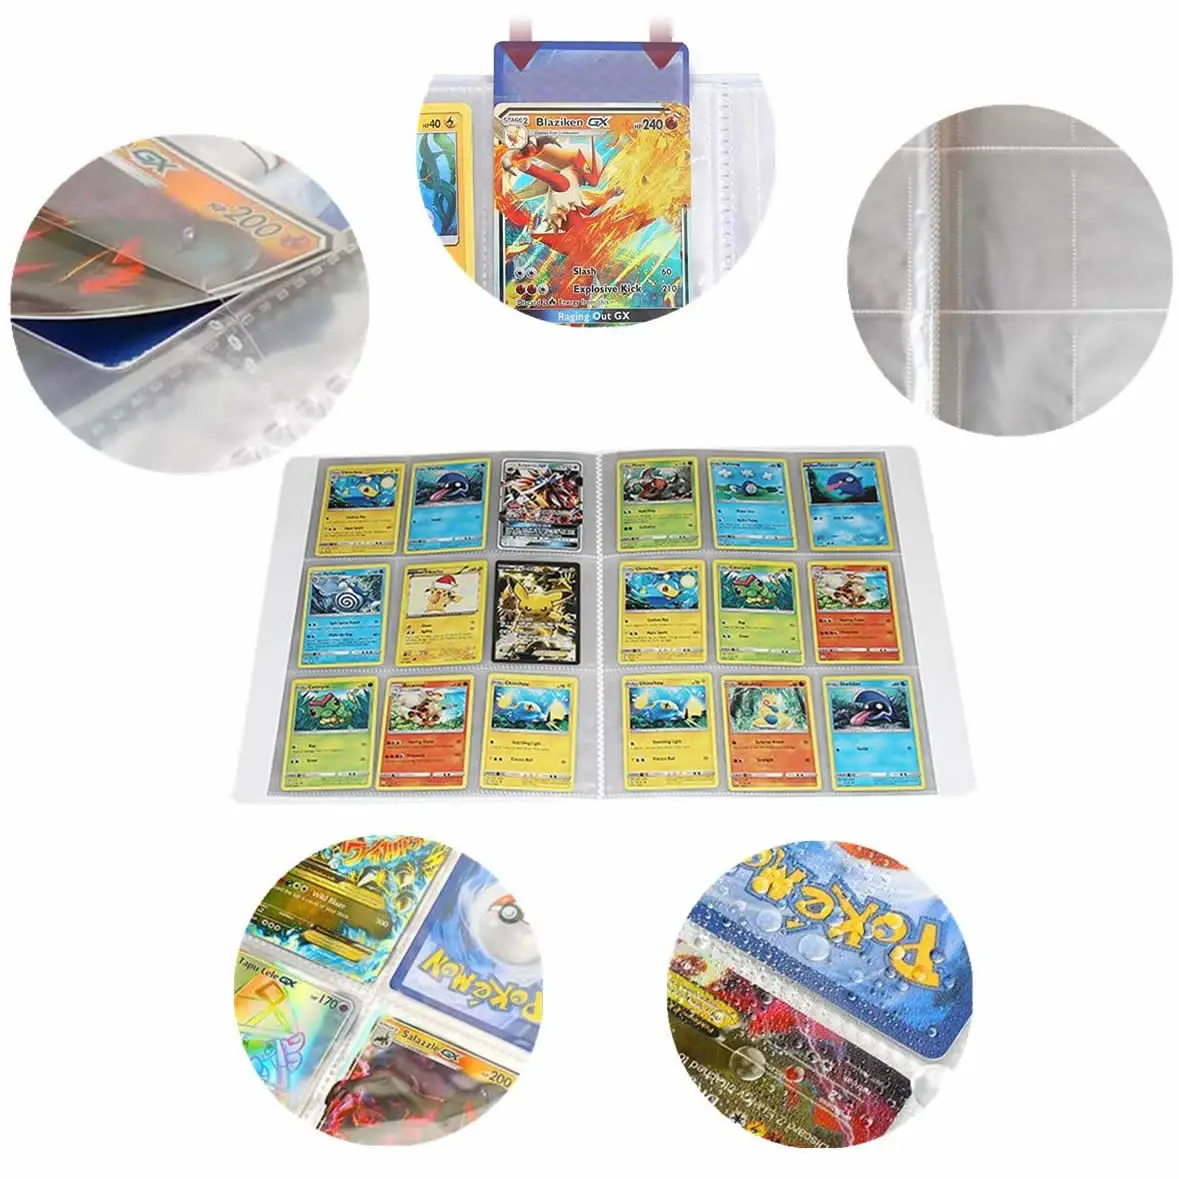 9 pocket album pokemon 432 anime card collection book playing game map pokémon binder folder holder list pikachu kids toys gift free global shipp